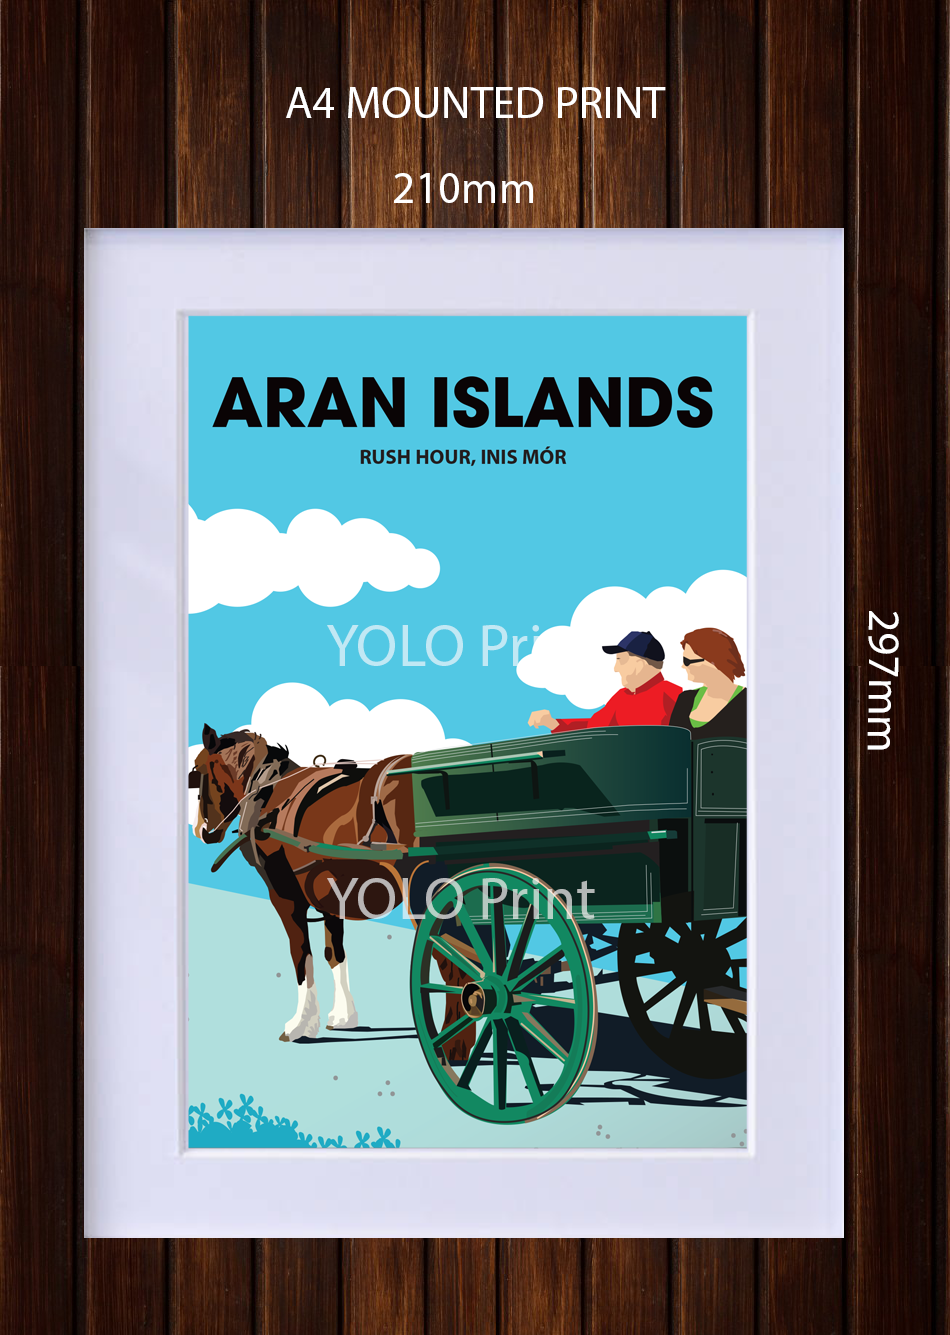 Aran Islands Postcard or A4 Mounted Print or Fridge Magnet - Rush Hour Inis Mor